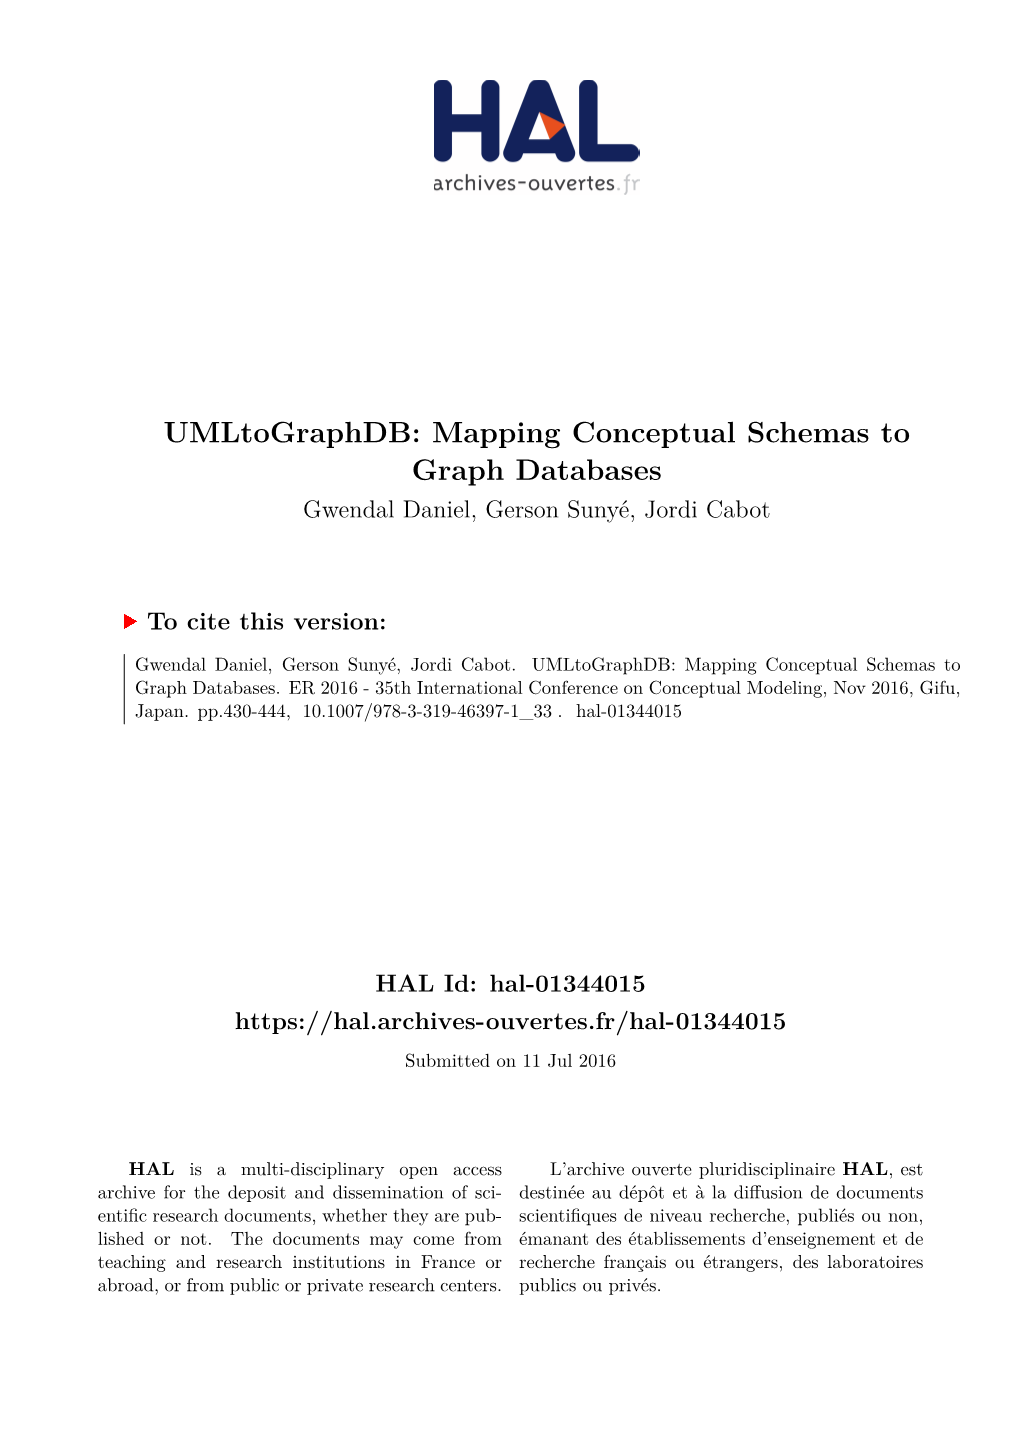 Mapping Conceptual Schemas to Graph Databases Gwendal Daniel, Gerson Sunyé, Jordi Cabot